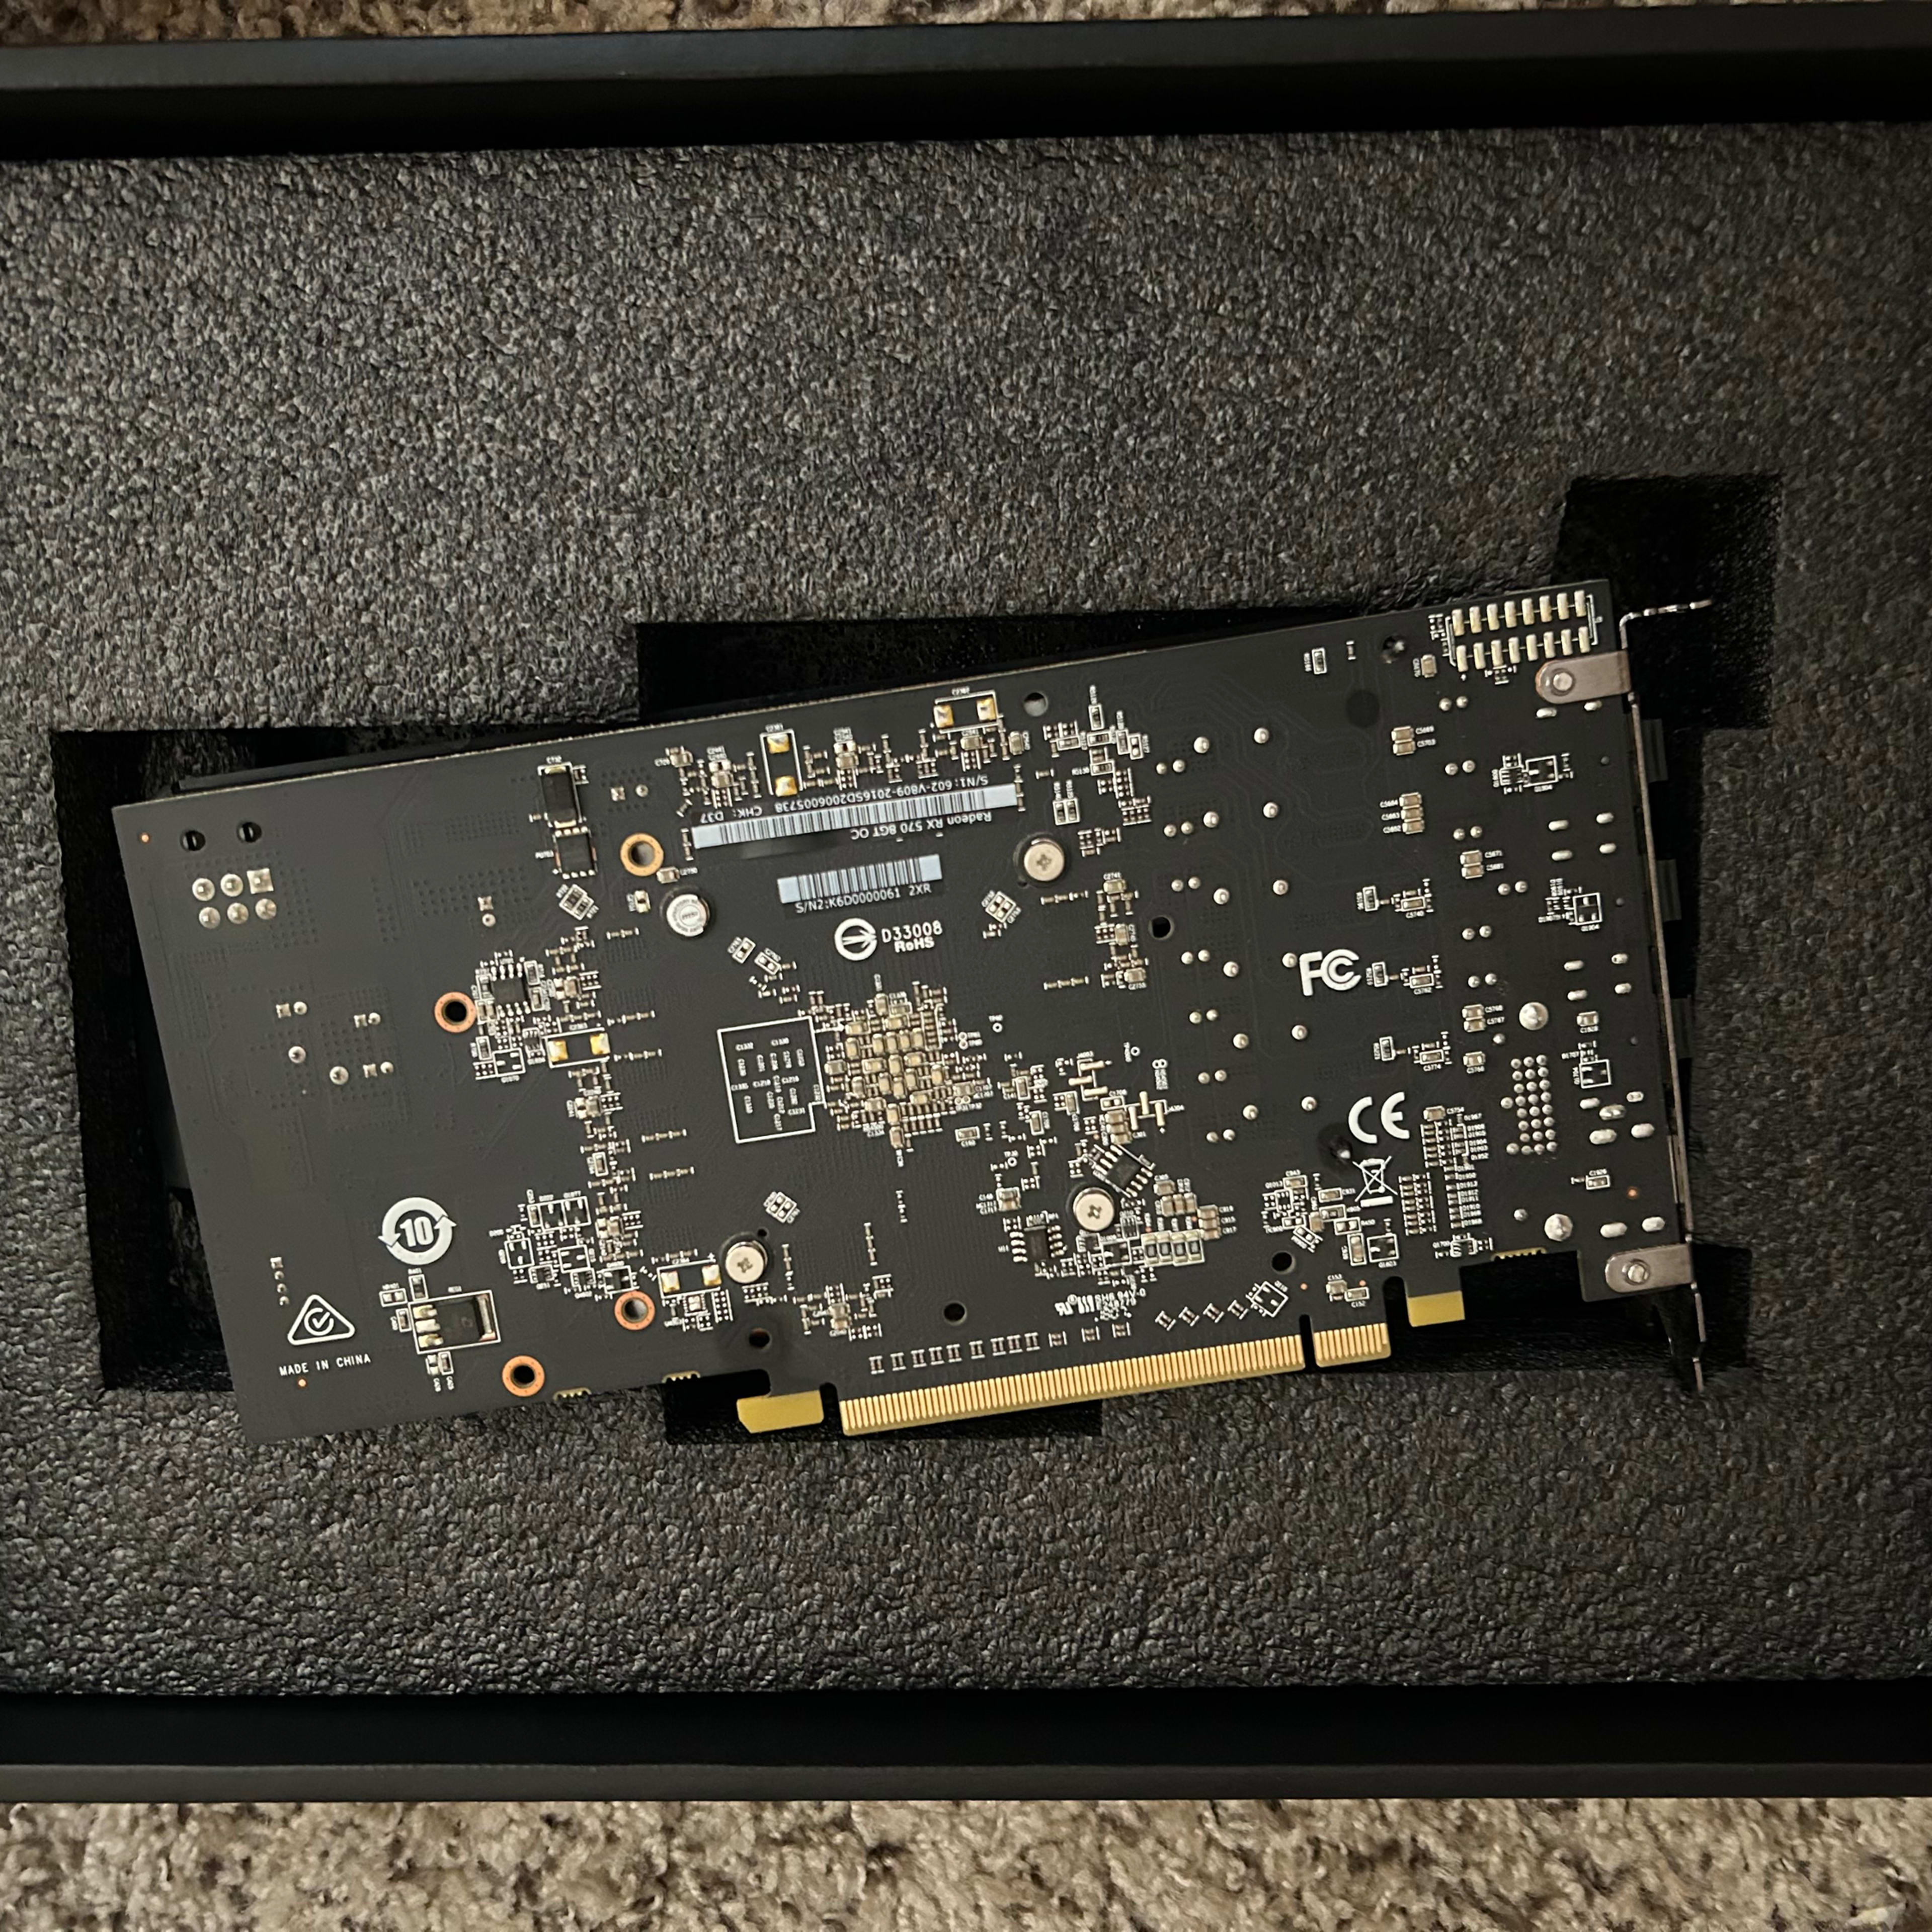 MSI Radeon RX 570 8GB GDDR5 Graphics Card+Free Gift